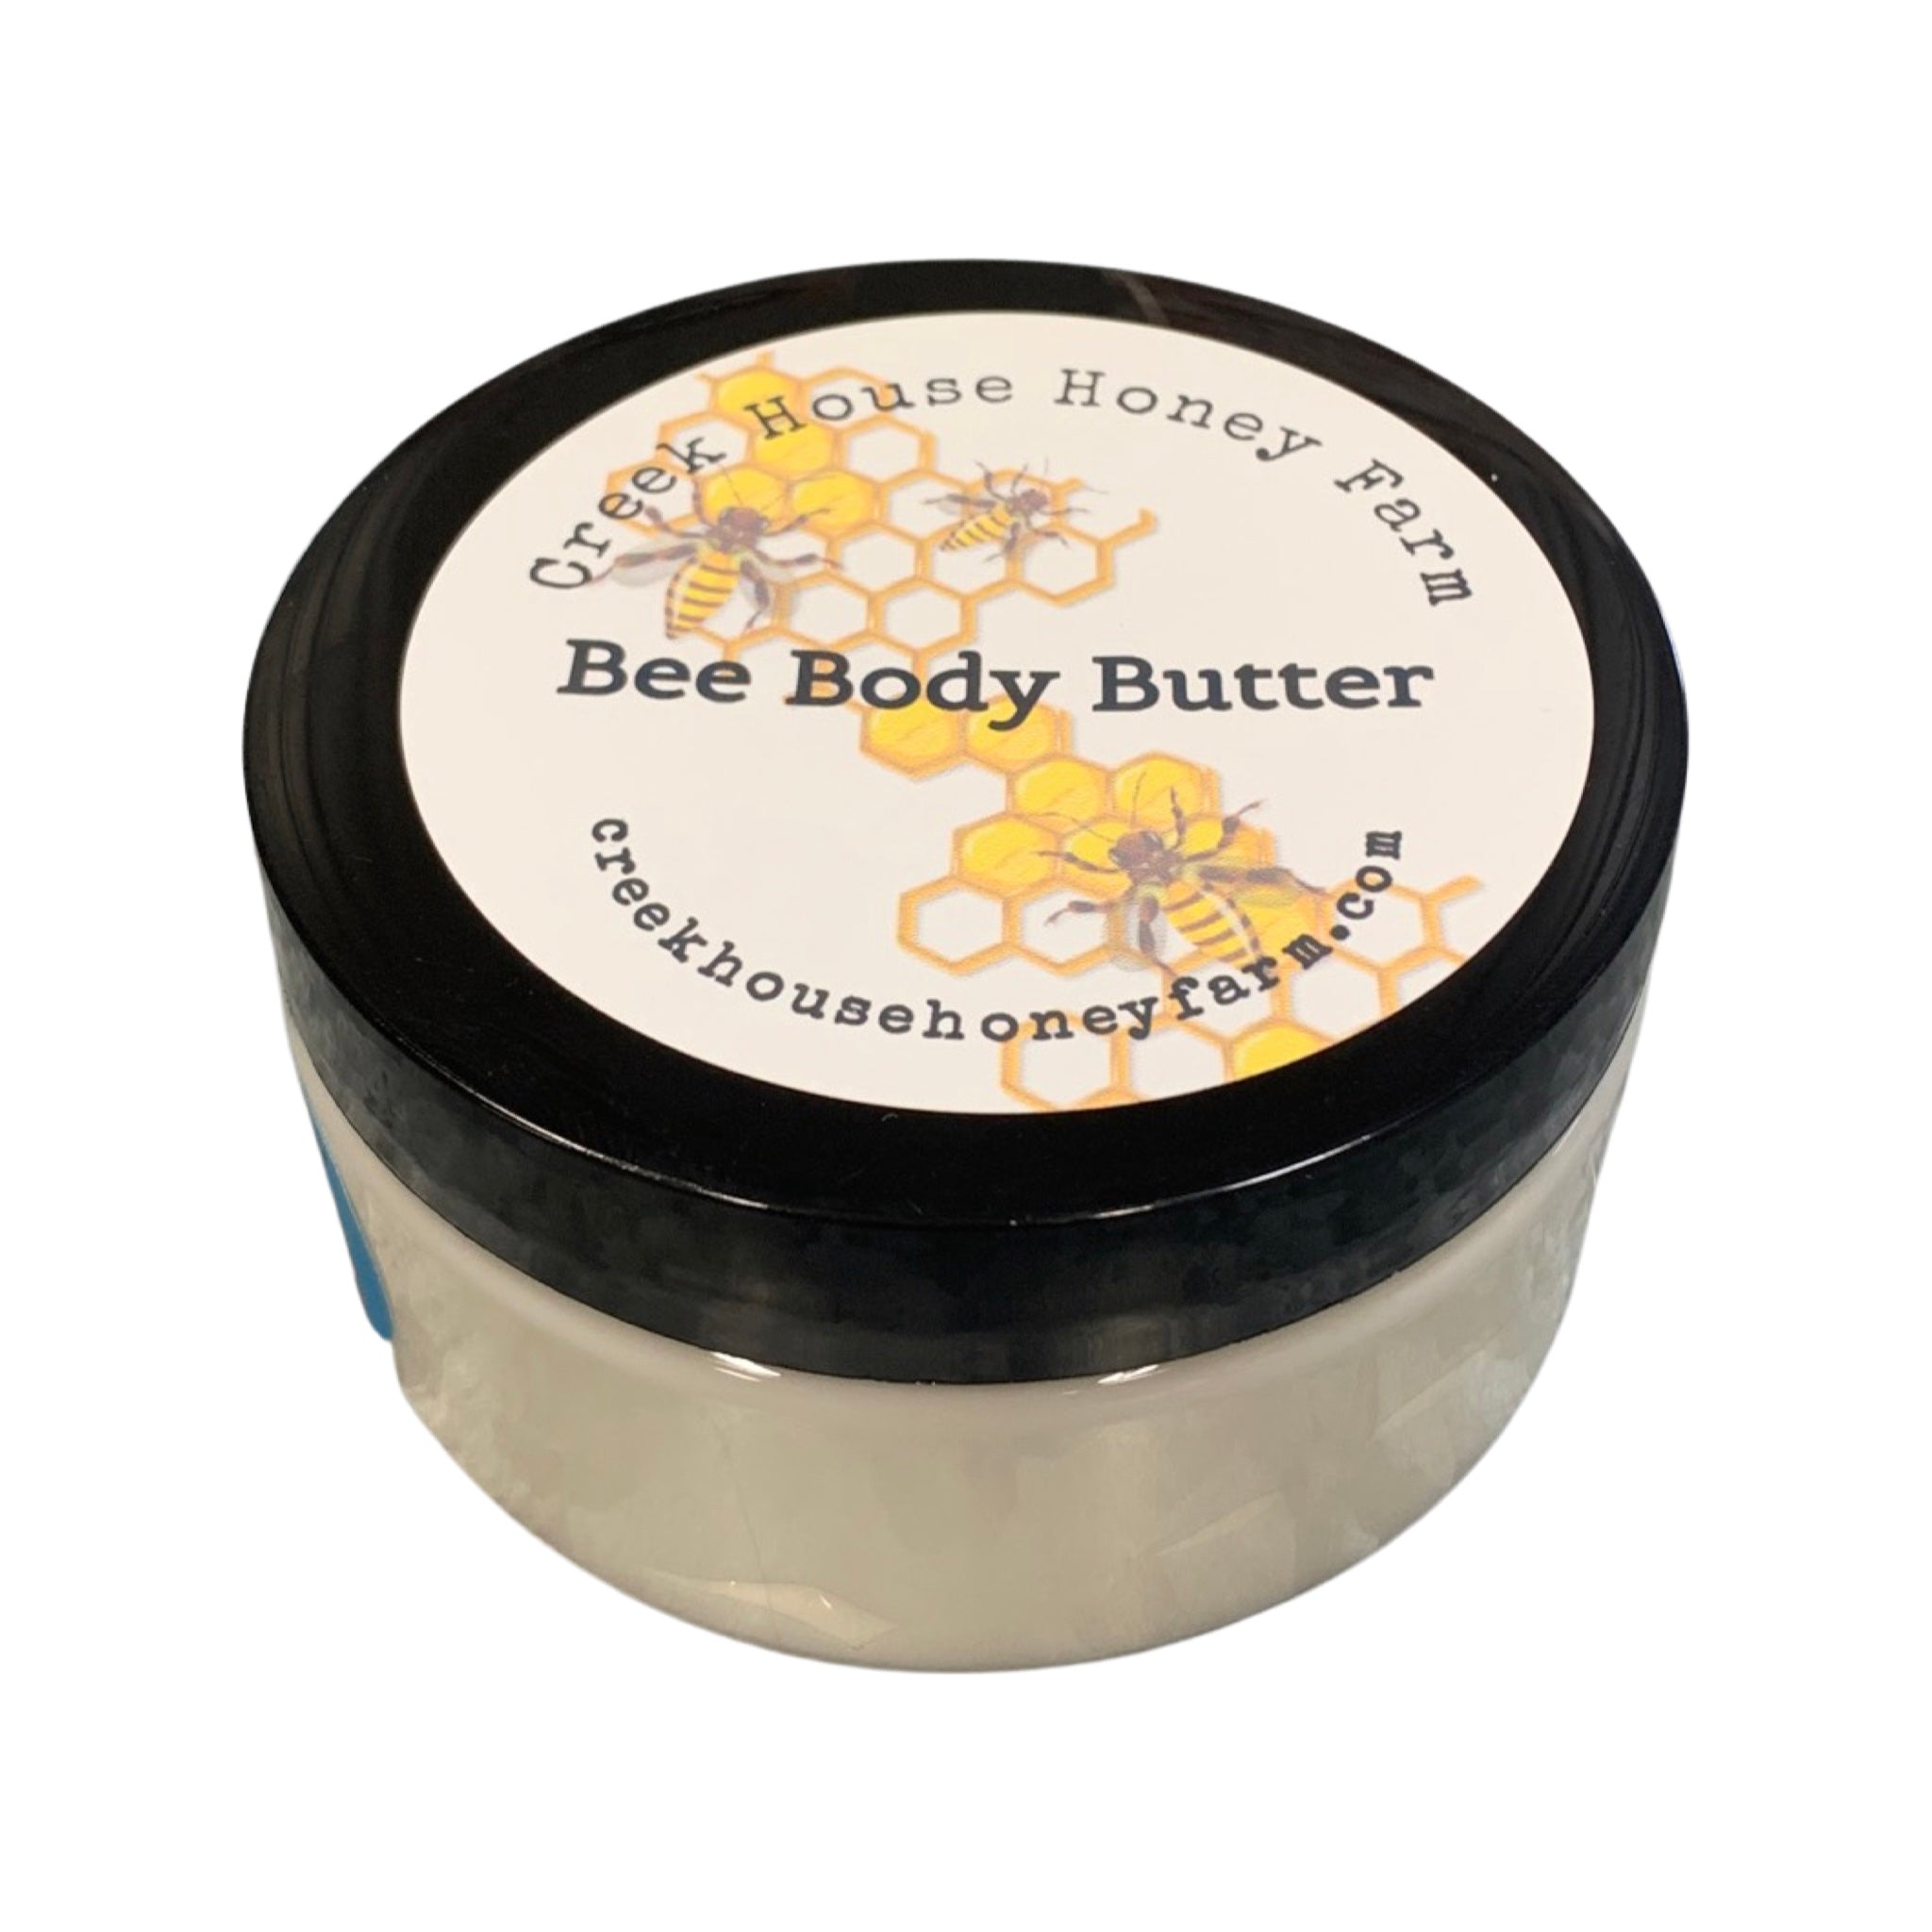 Bee body butter.